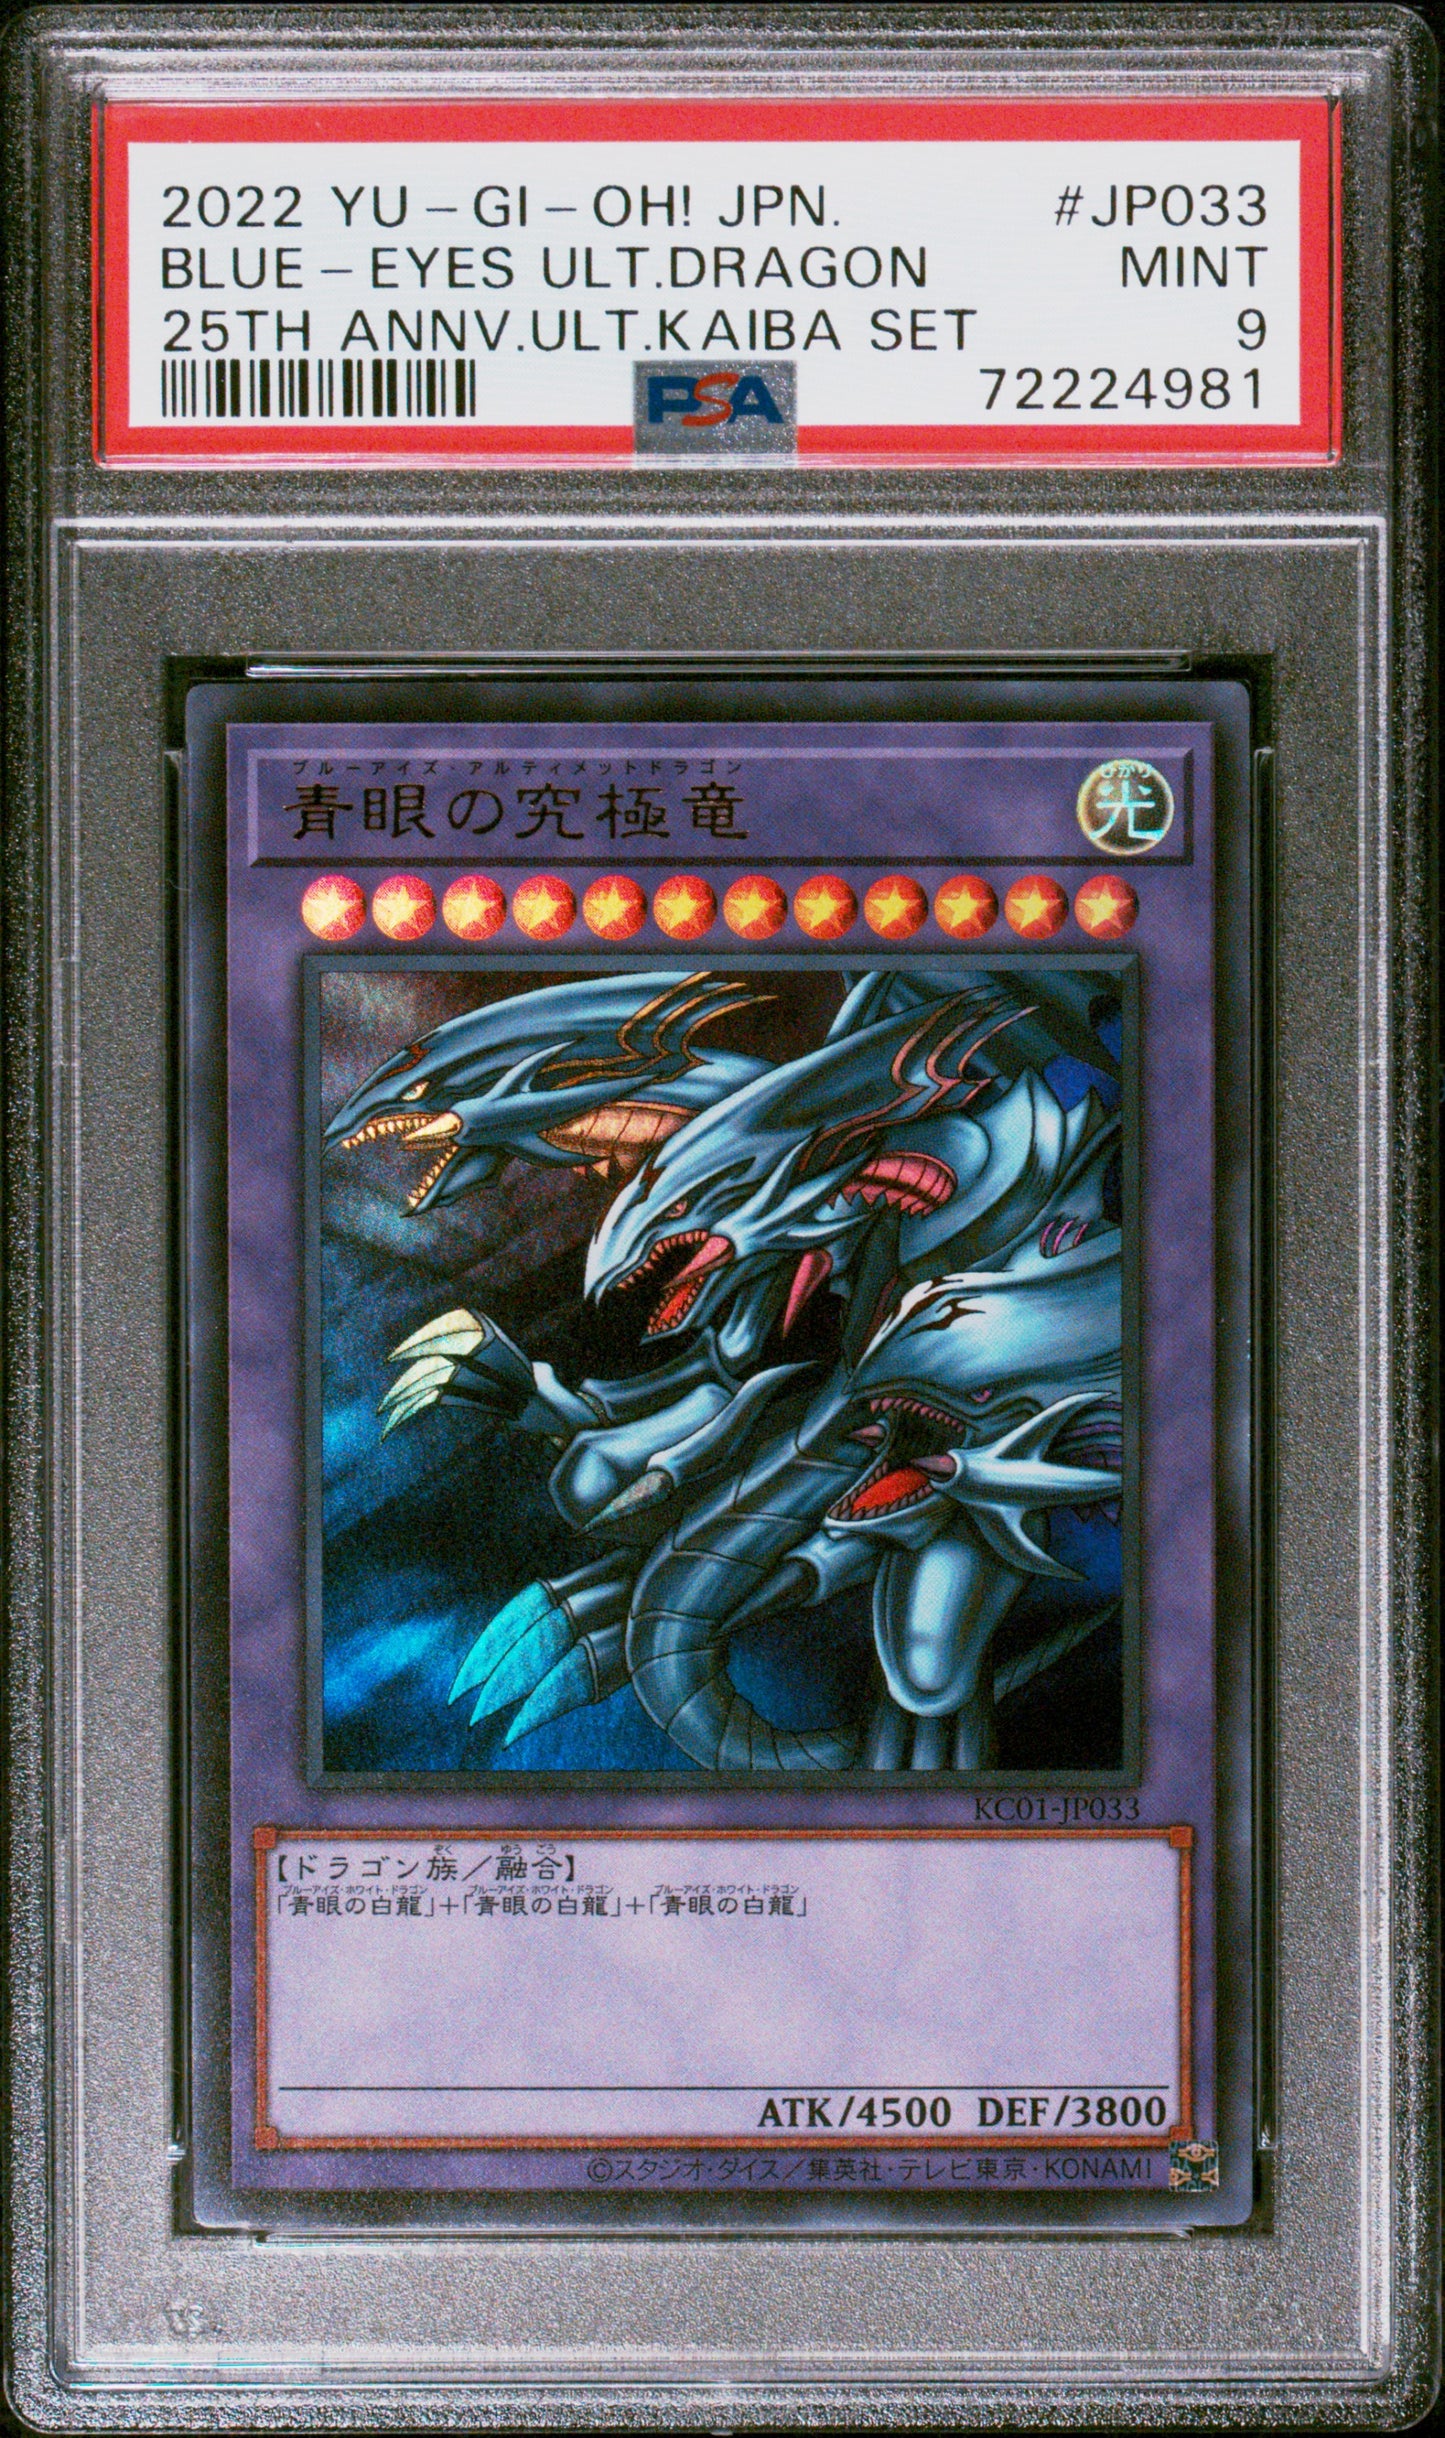 PSA 9 - Blue-Eyes Ultimate Dragon KC01-JP033 25th Anniversary Ult. Kaiba Set - Yu-Gi-Oh!